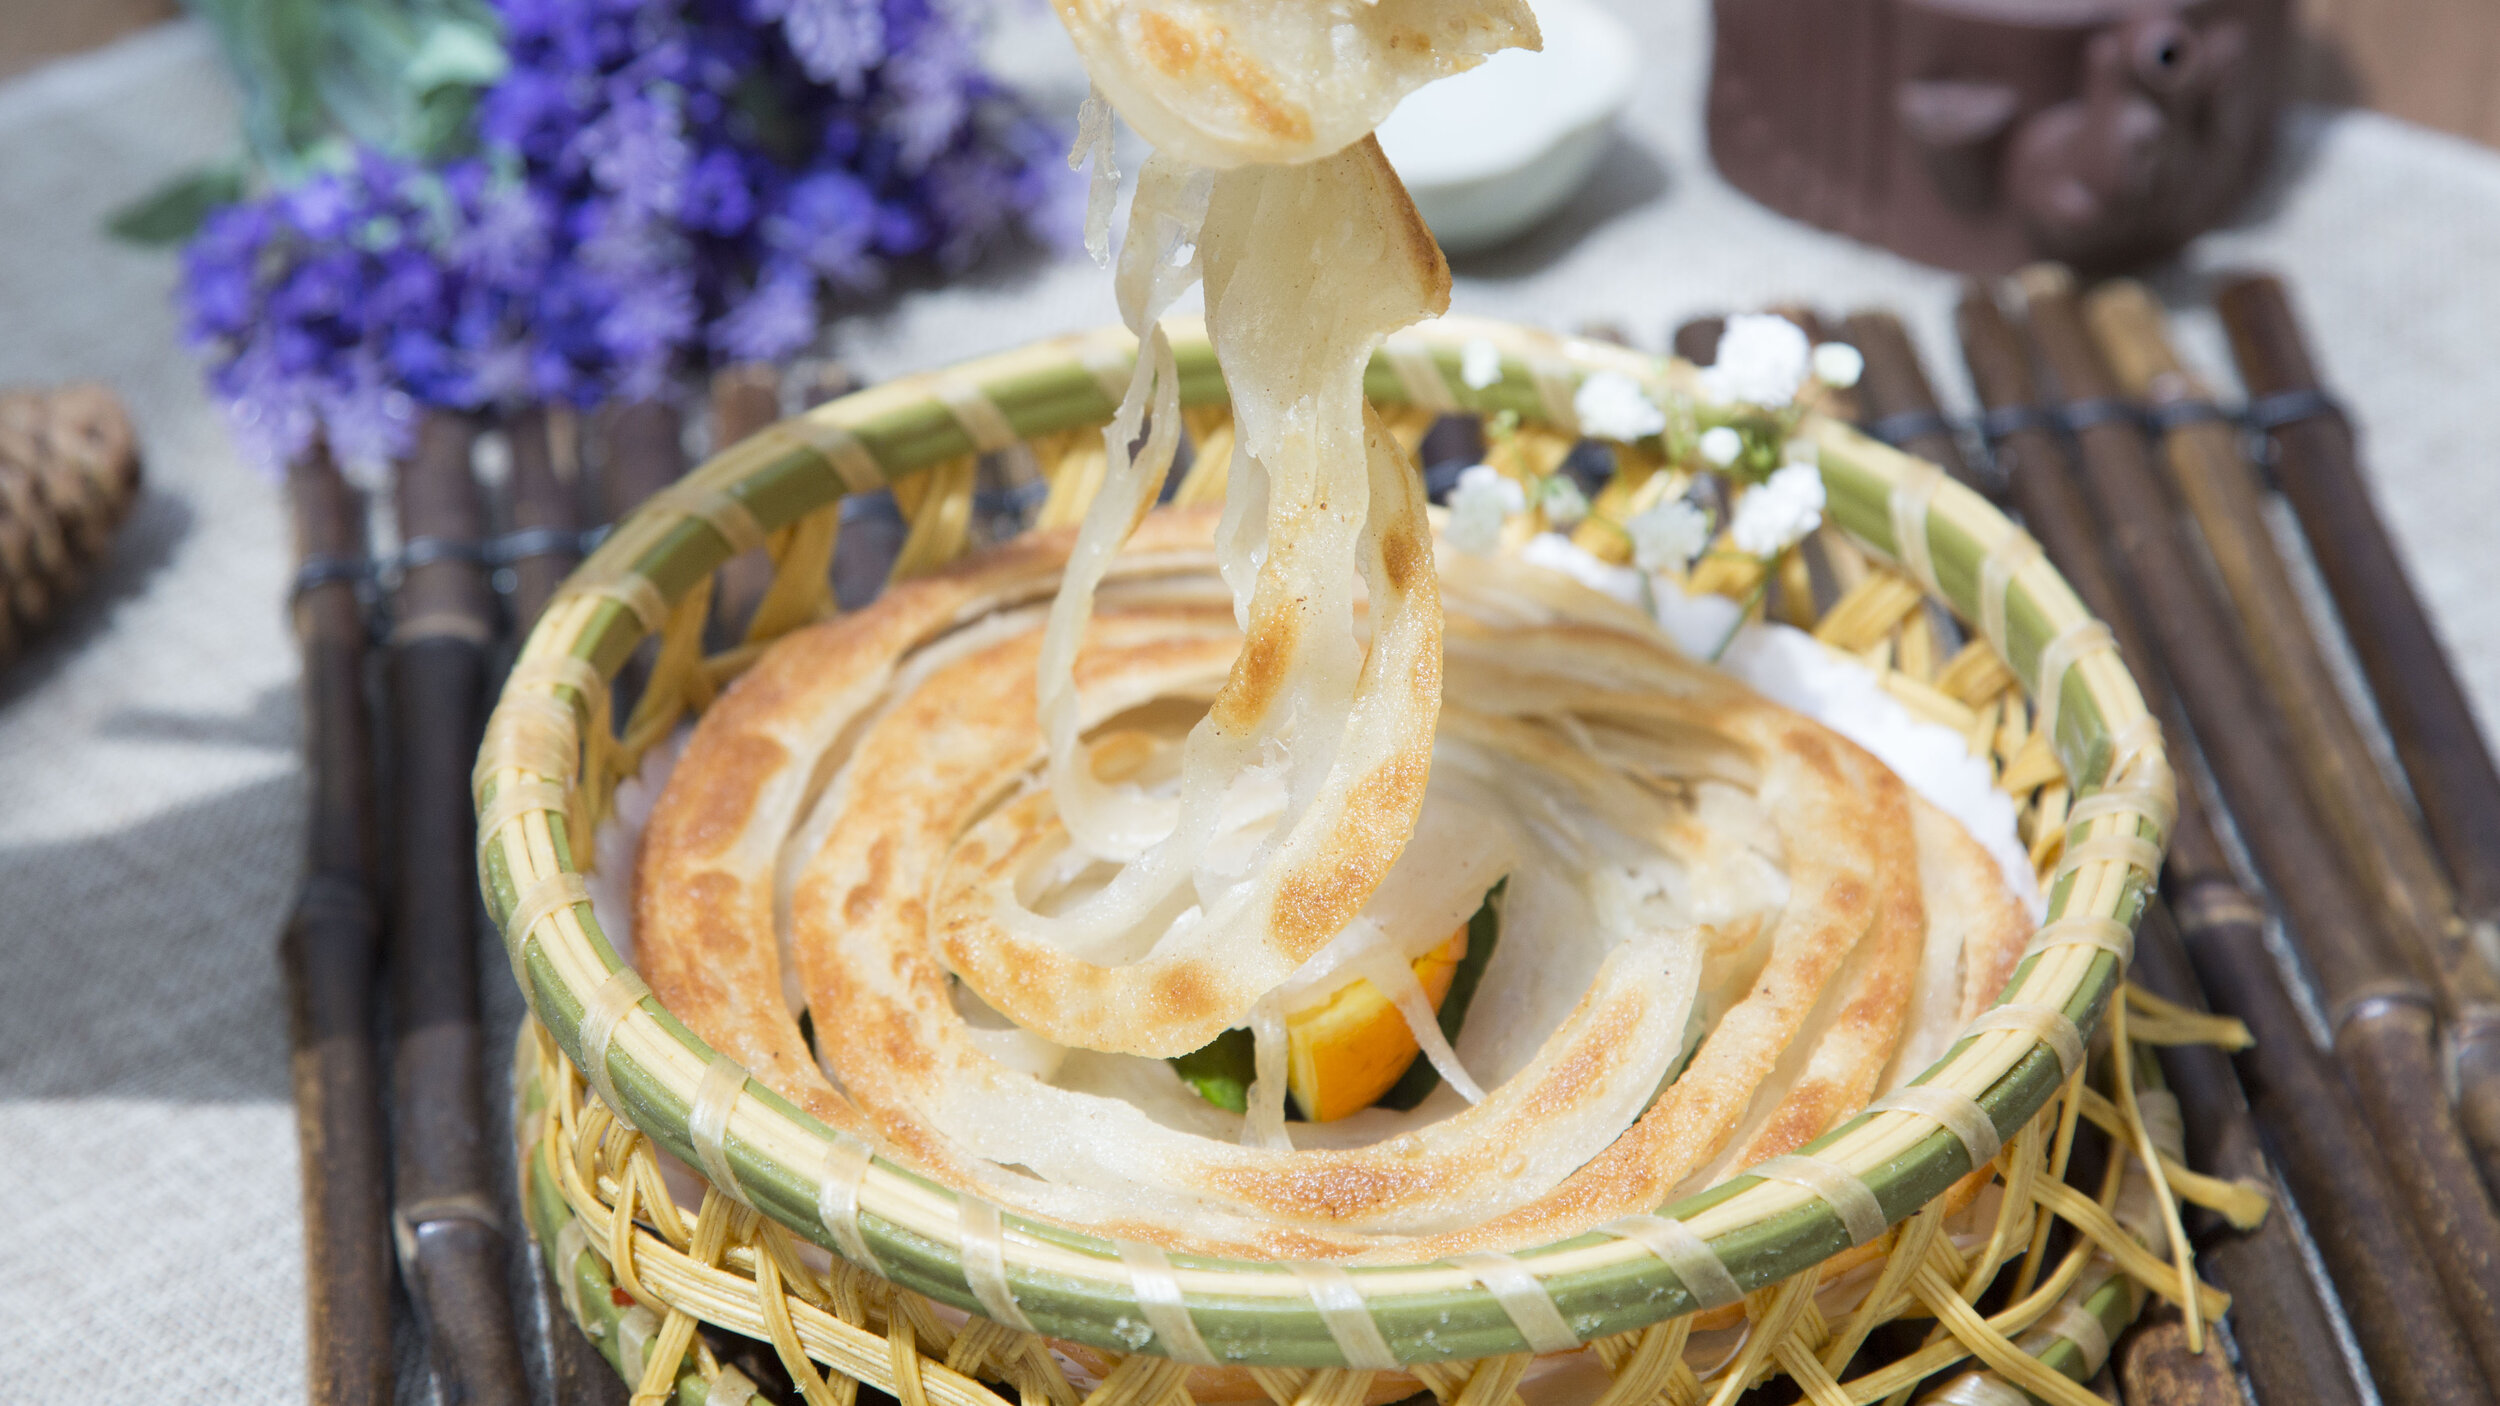 主食 special staples food 招牌手抓饼 handmade thousand layers pancakes .jpg